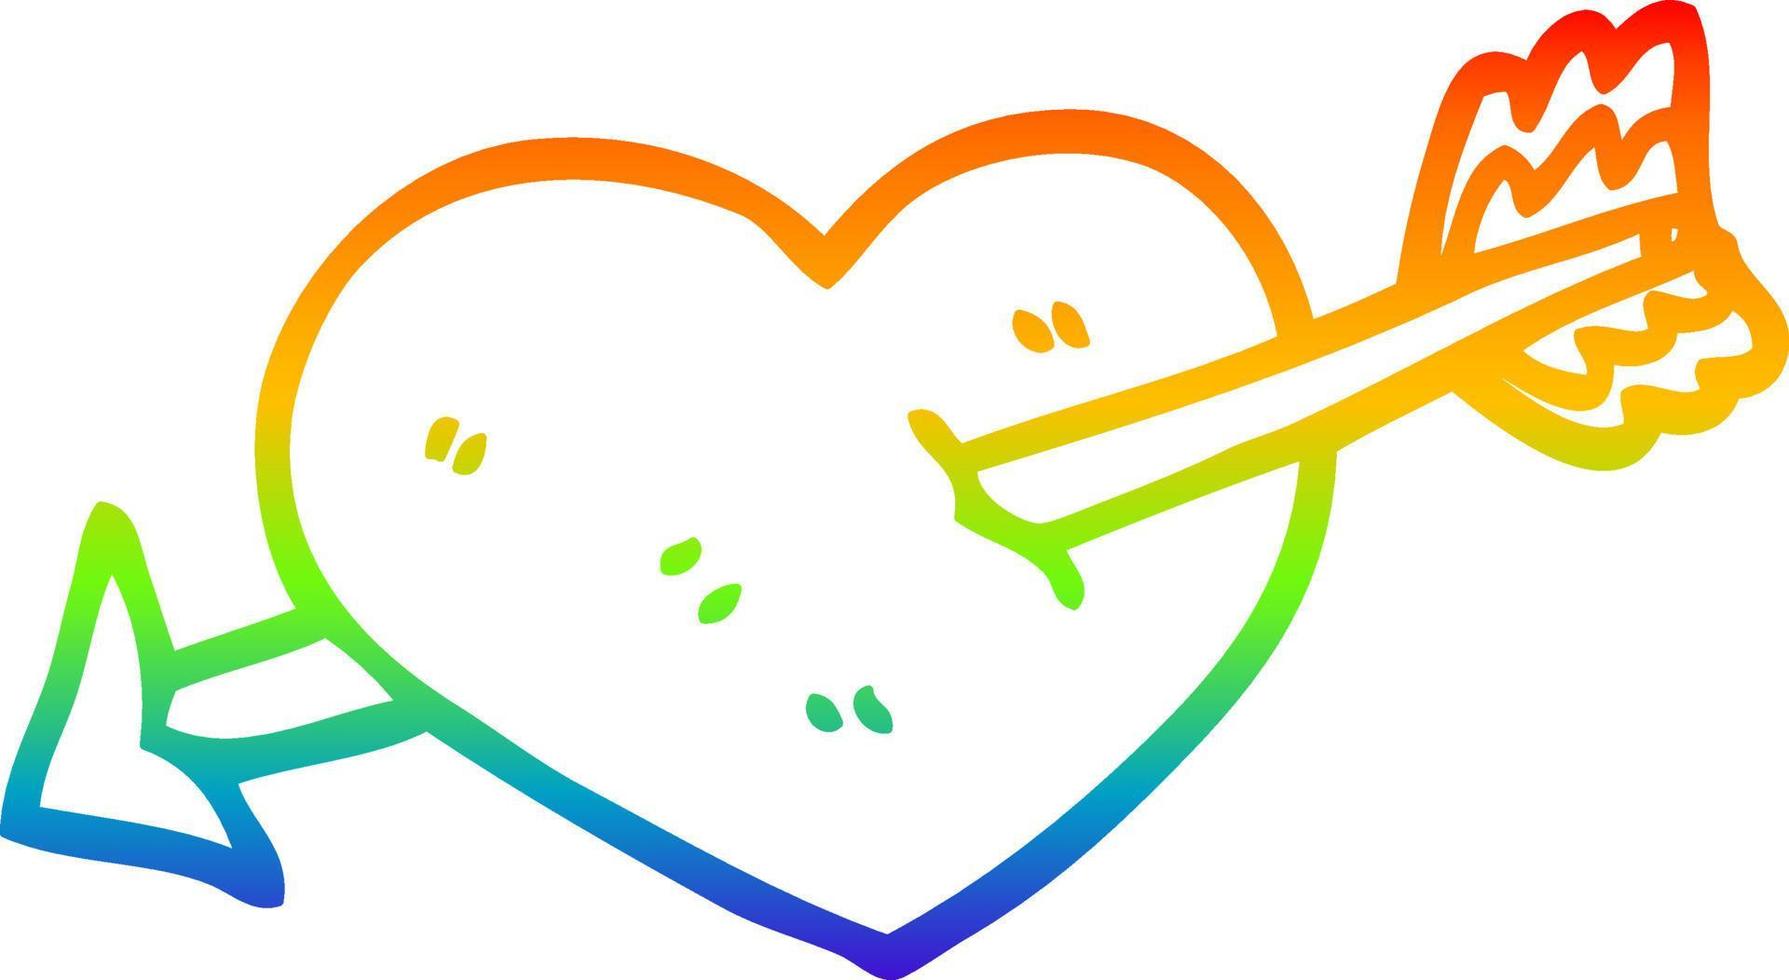 rainbow gradient line drawing cartoon heart shot through with arrow vector